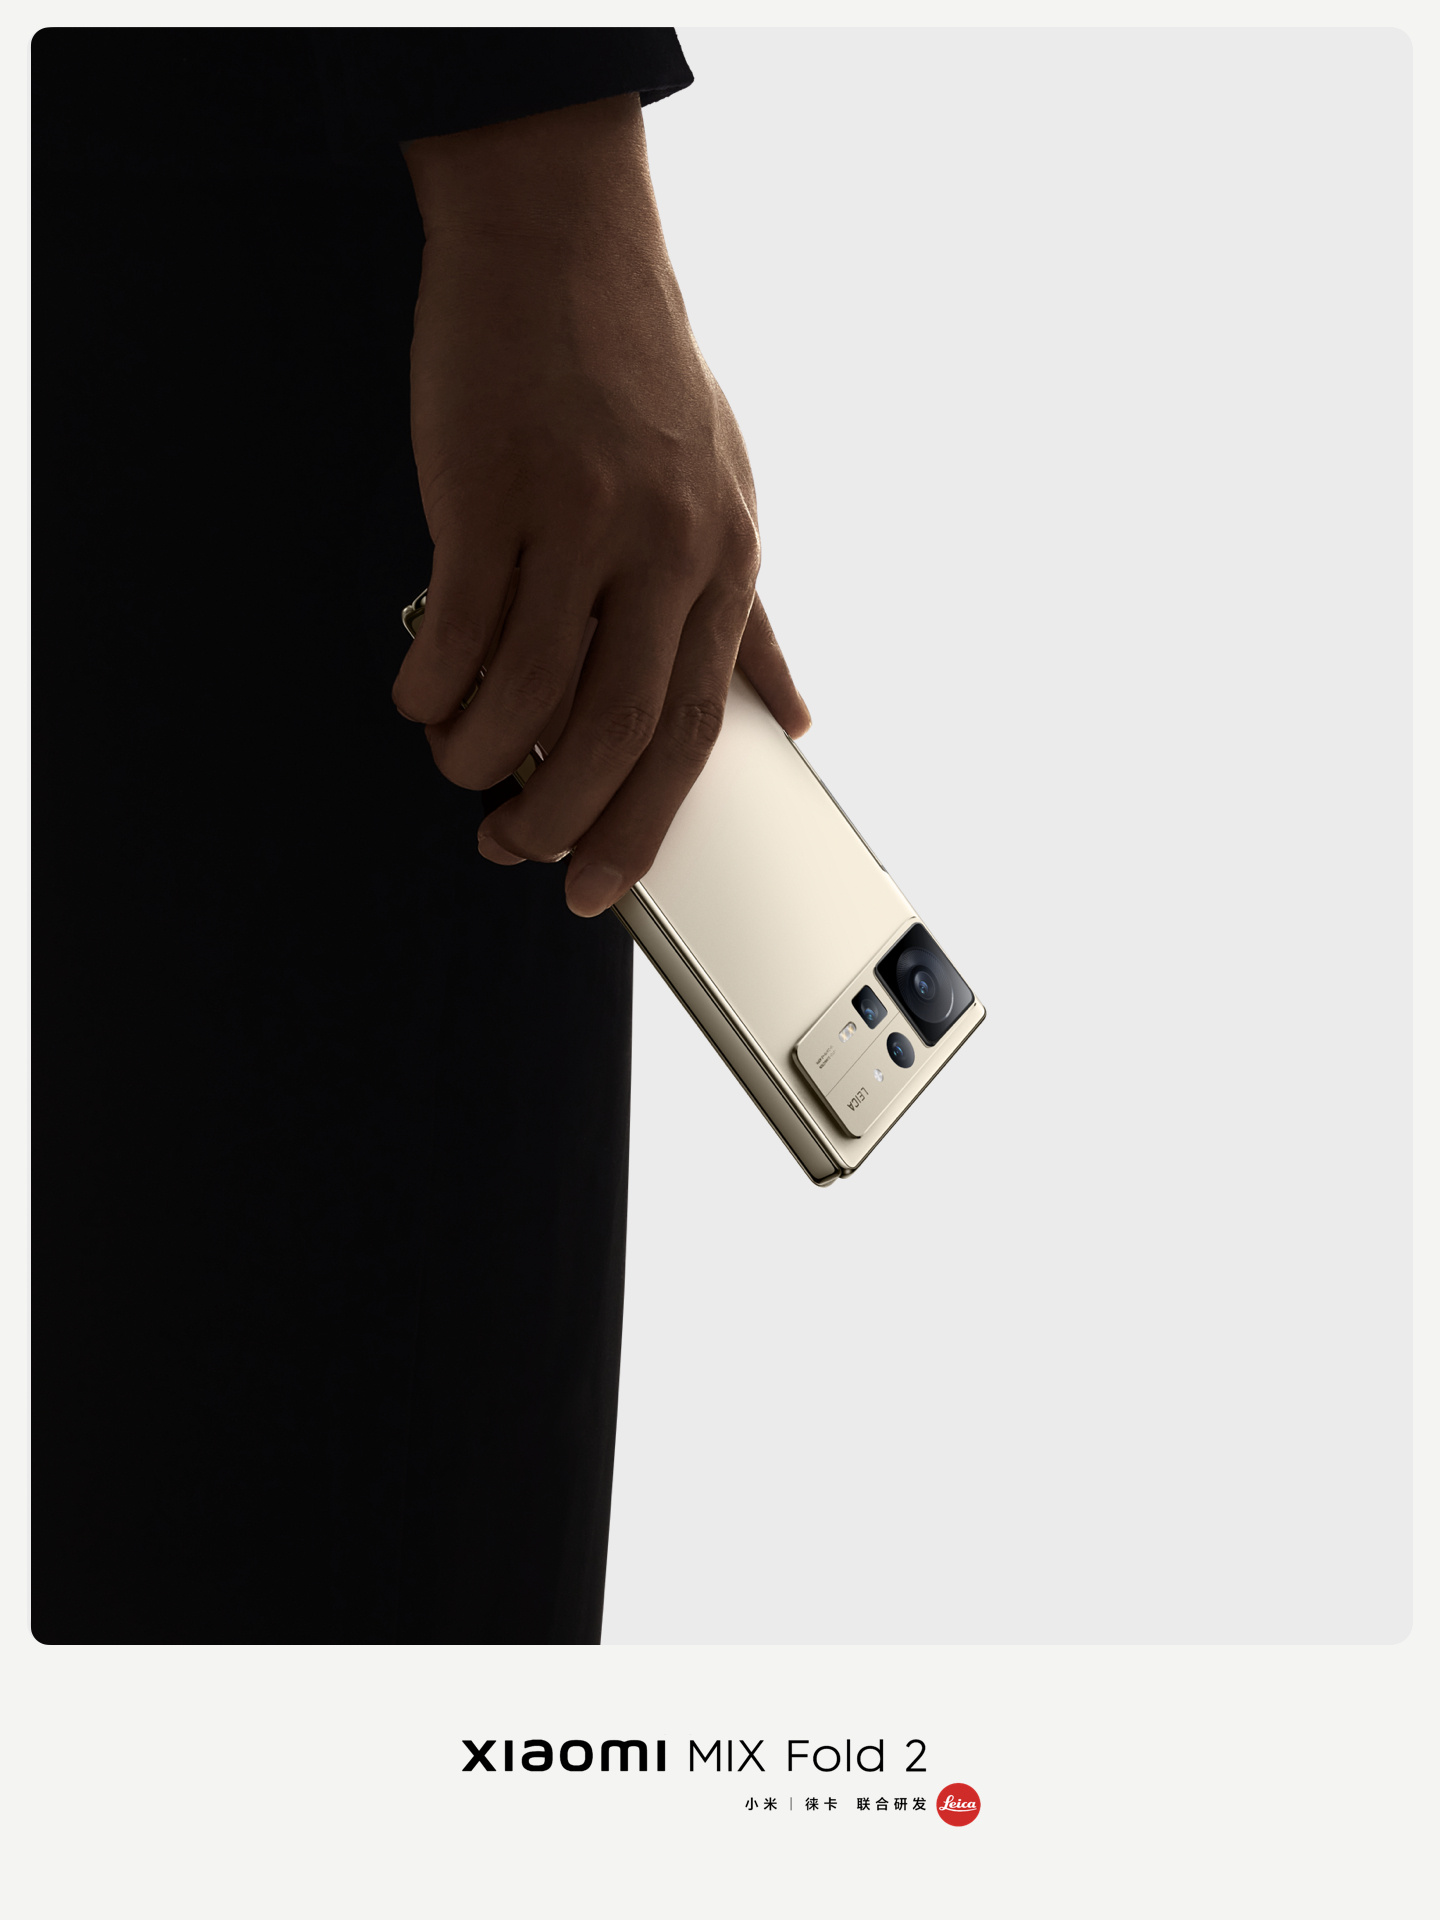 składany smartfon Xiaomi MIX Fold 2 foldable smartphone